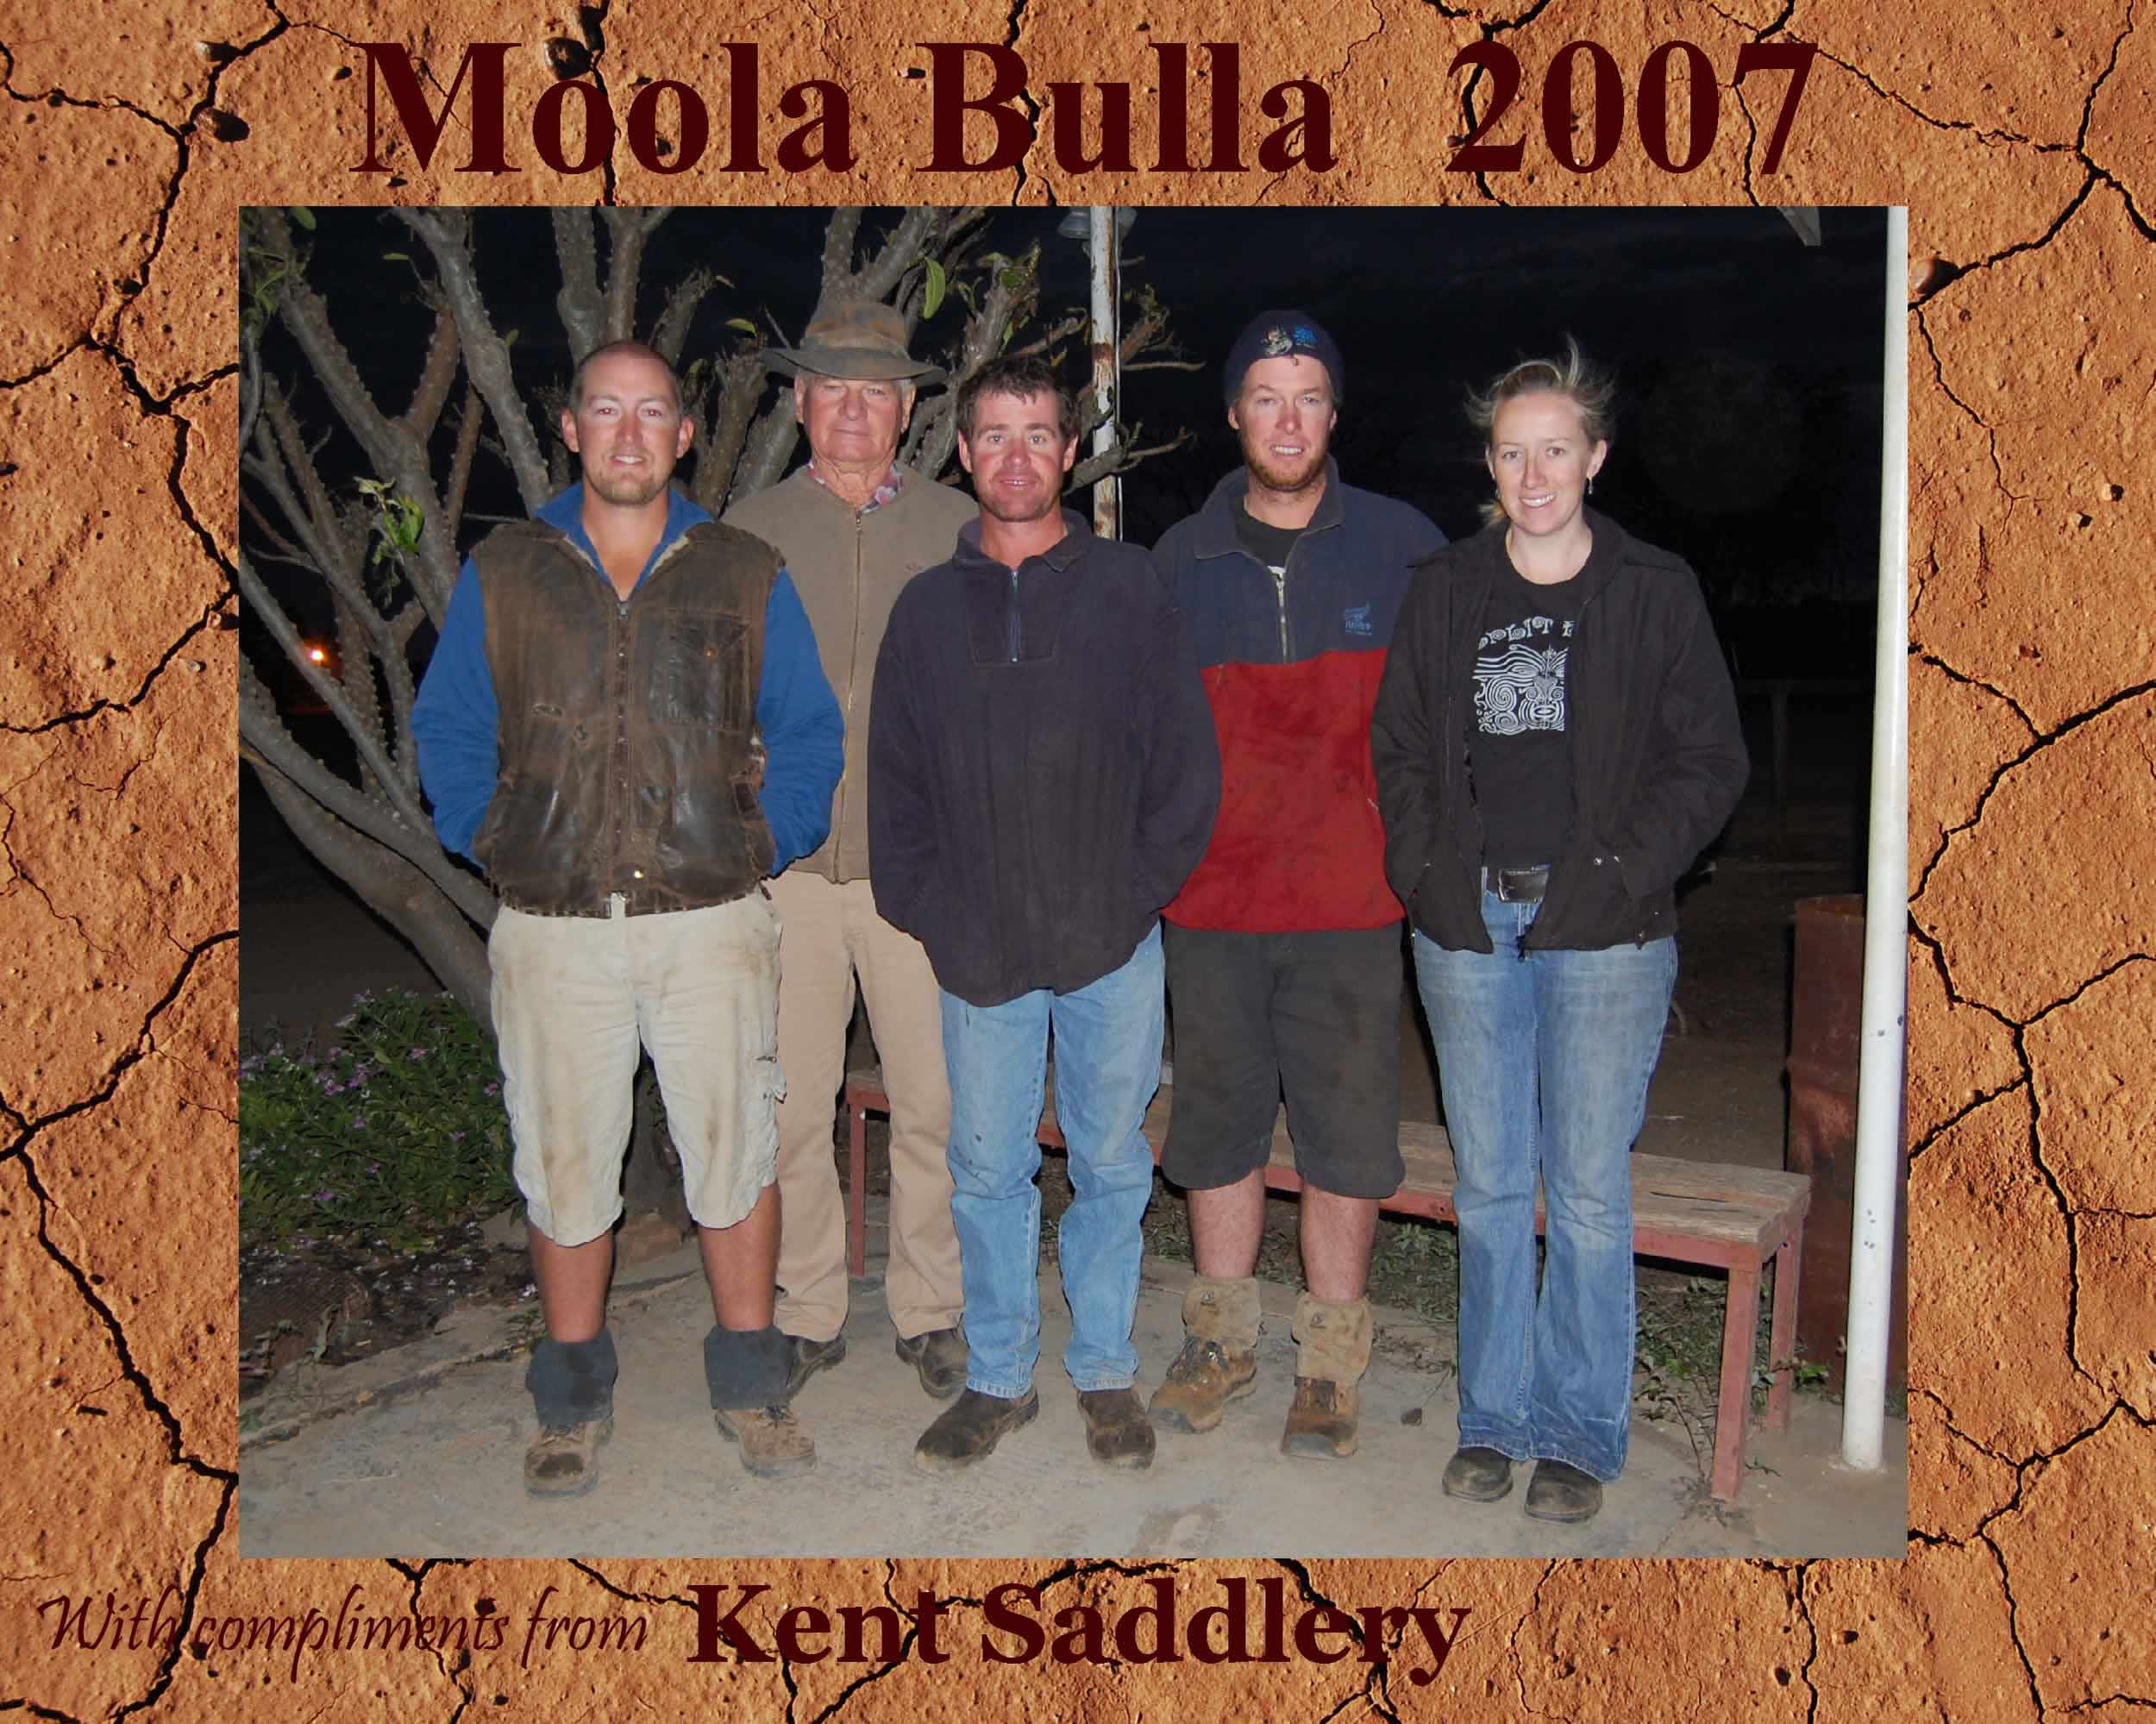 Western Australia - Moola Bulla 21